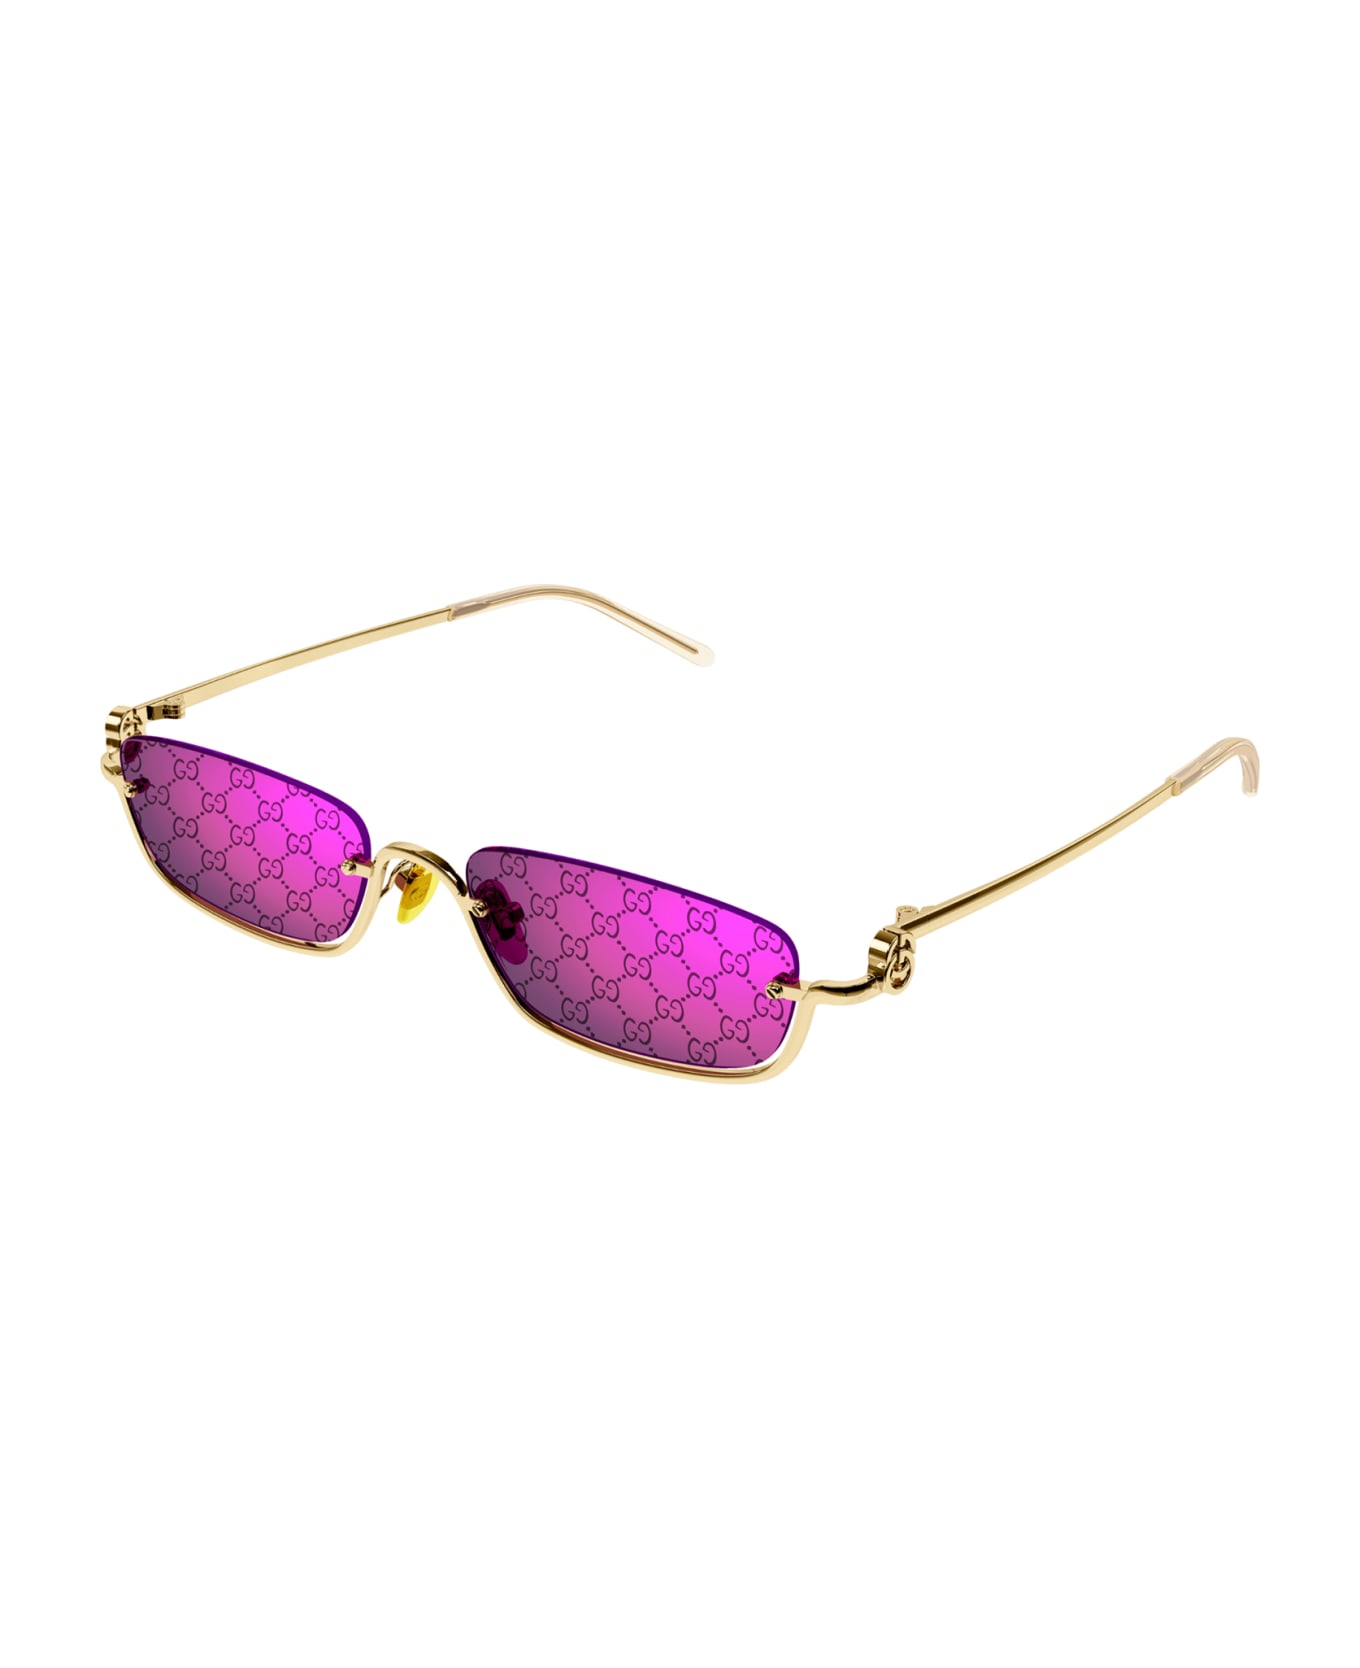 Gucci Eyewear GG1278S Sunglasses - Gold Gold Violet